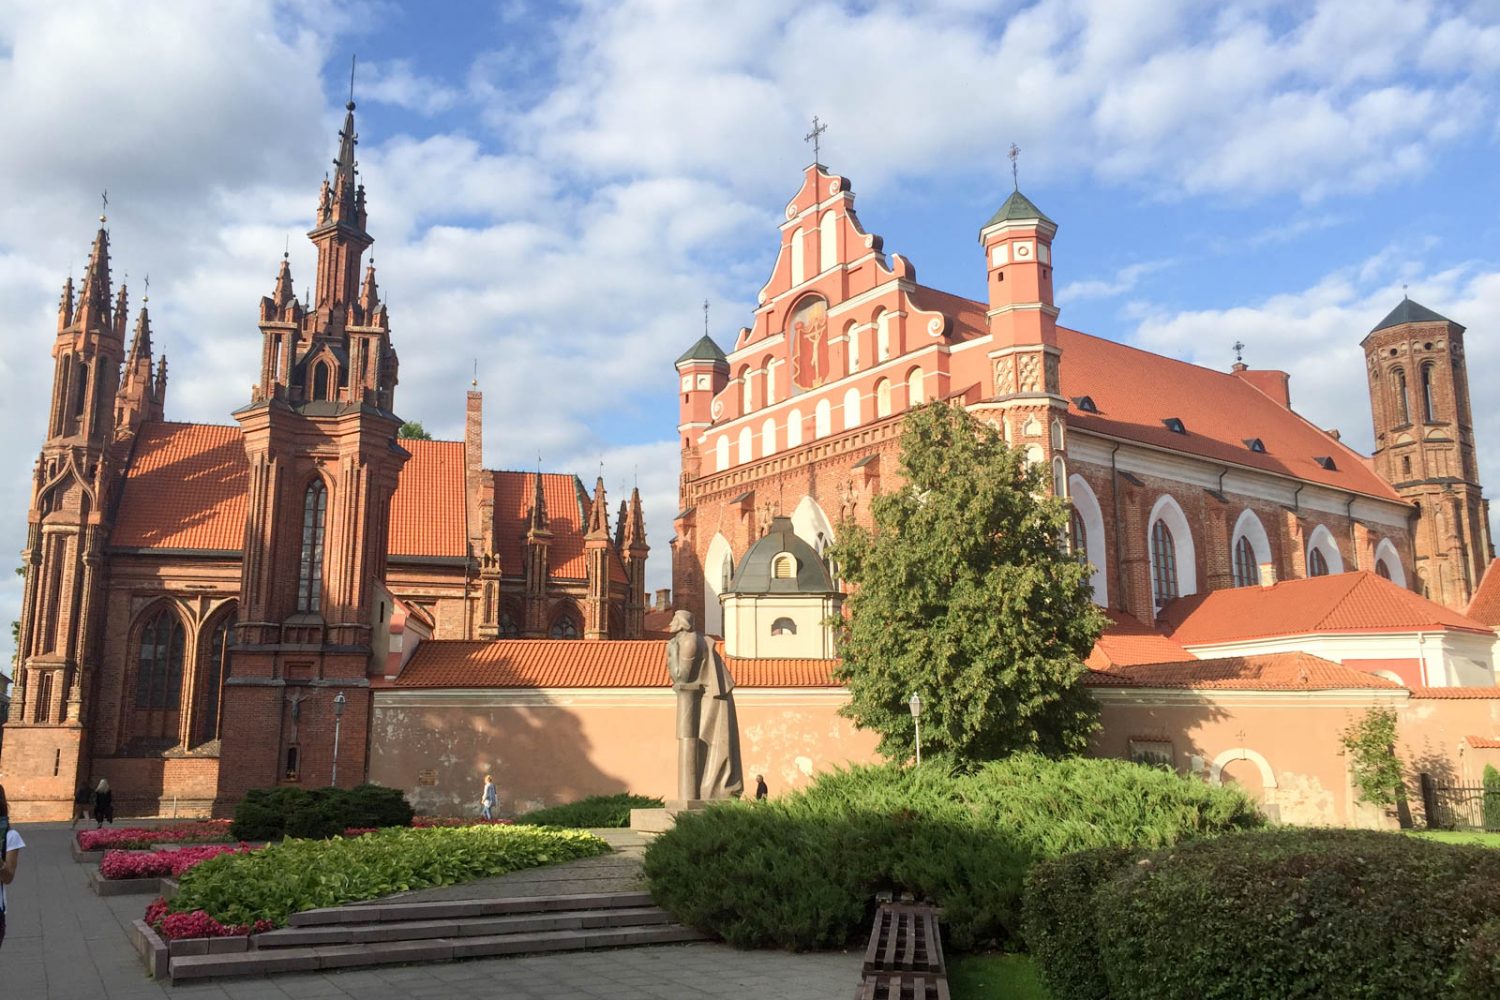 tour around vilnius city and trakai castle